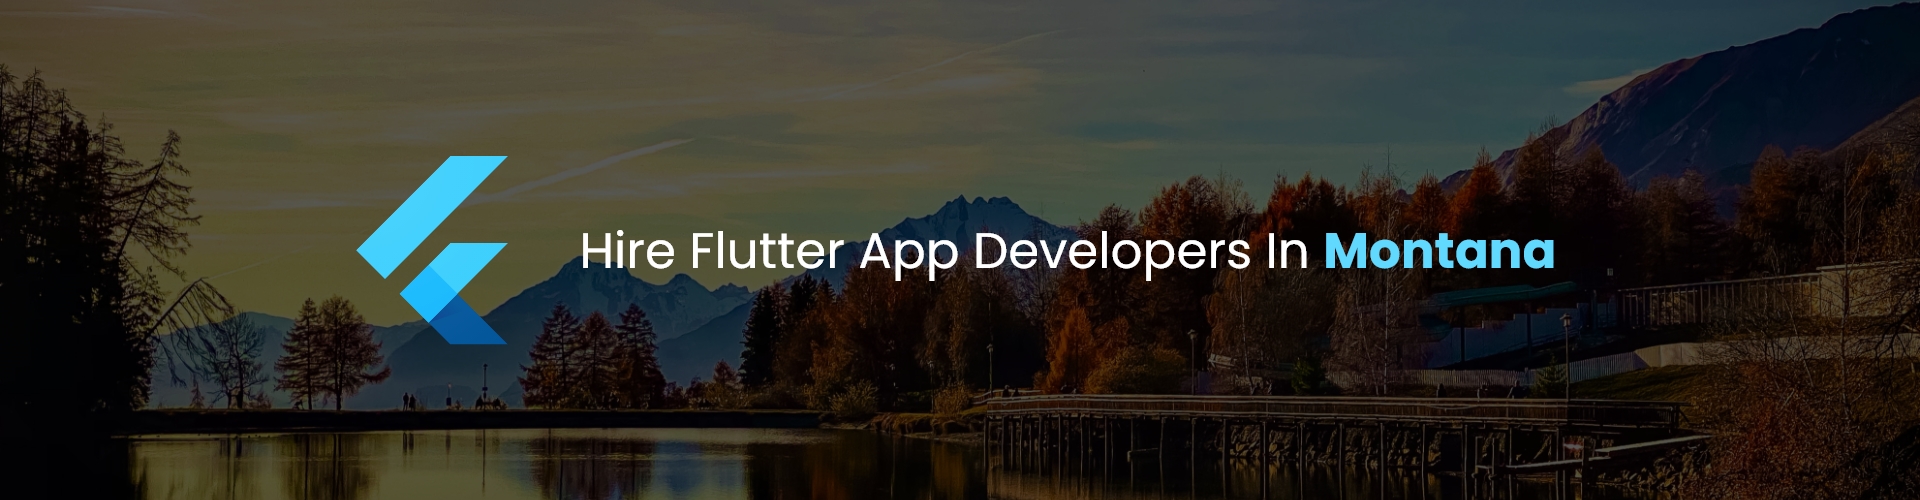 hire flutter app developers in missouri